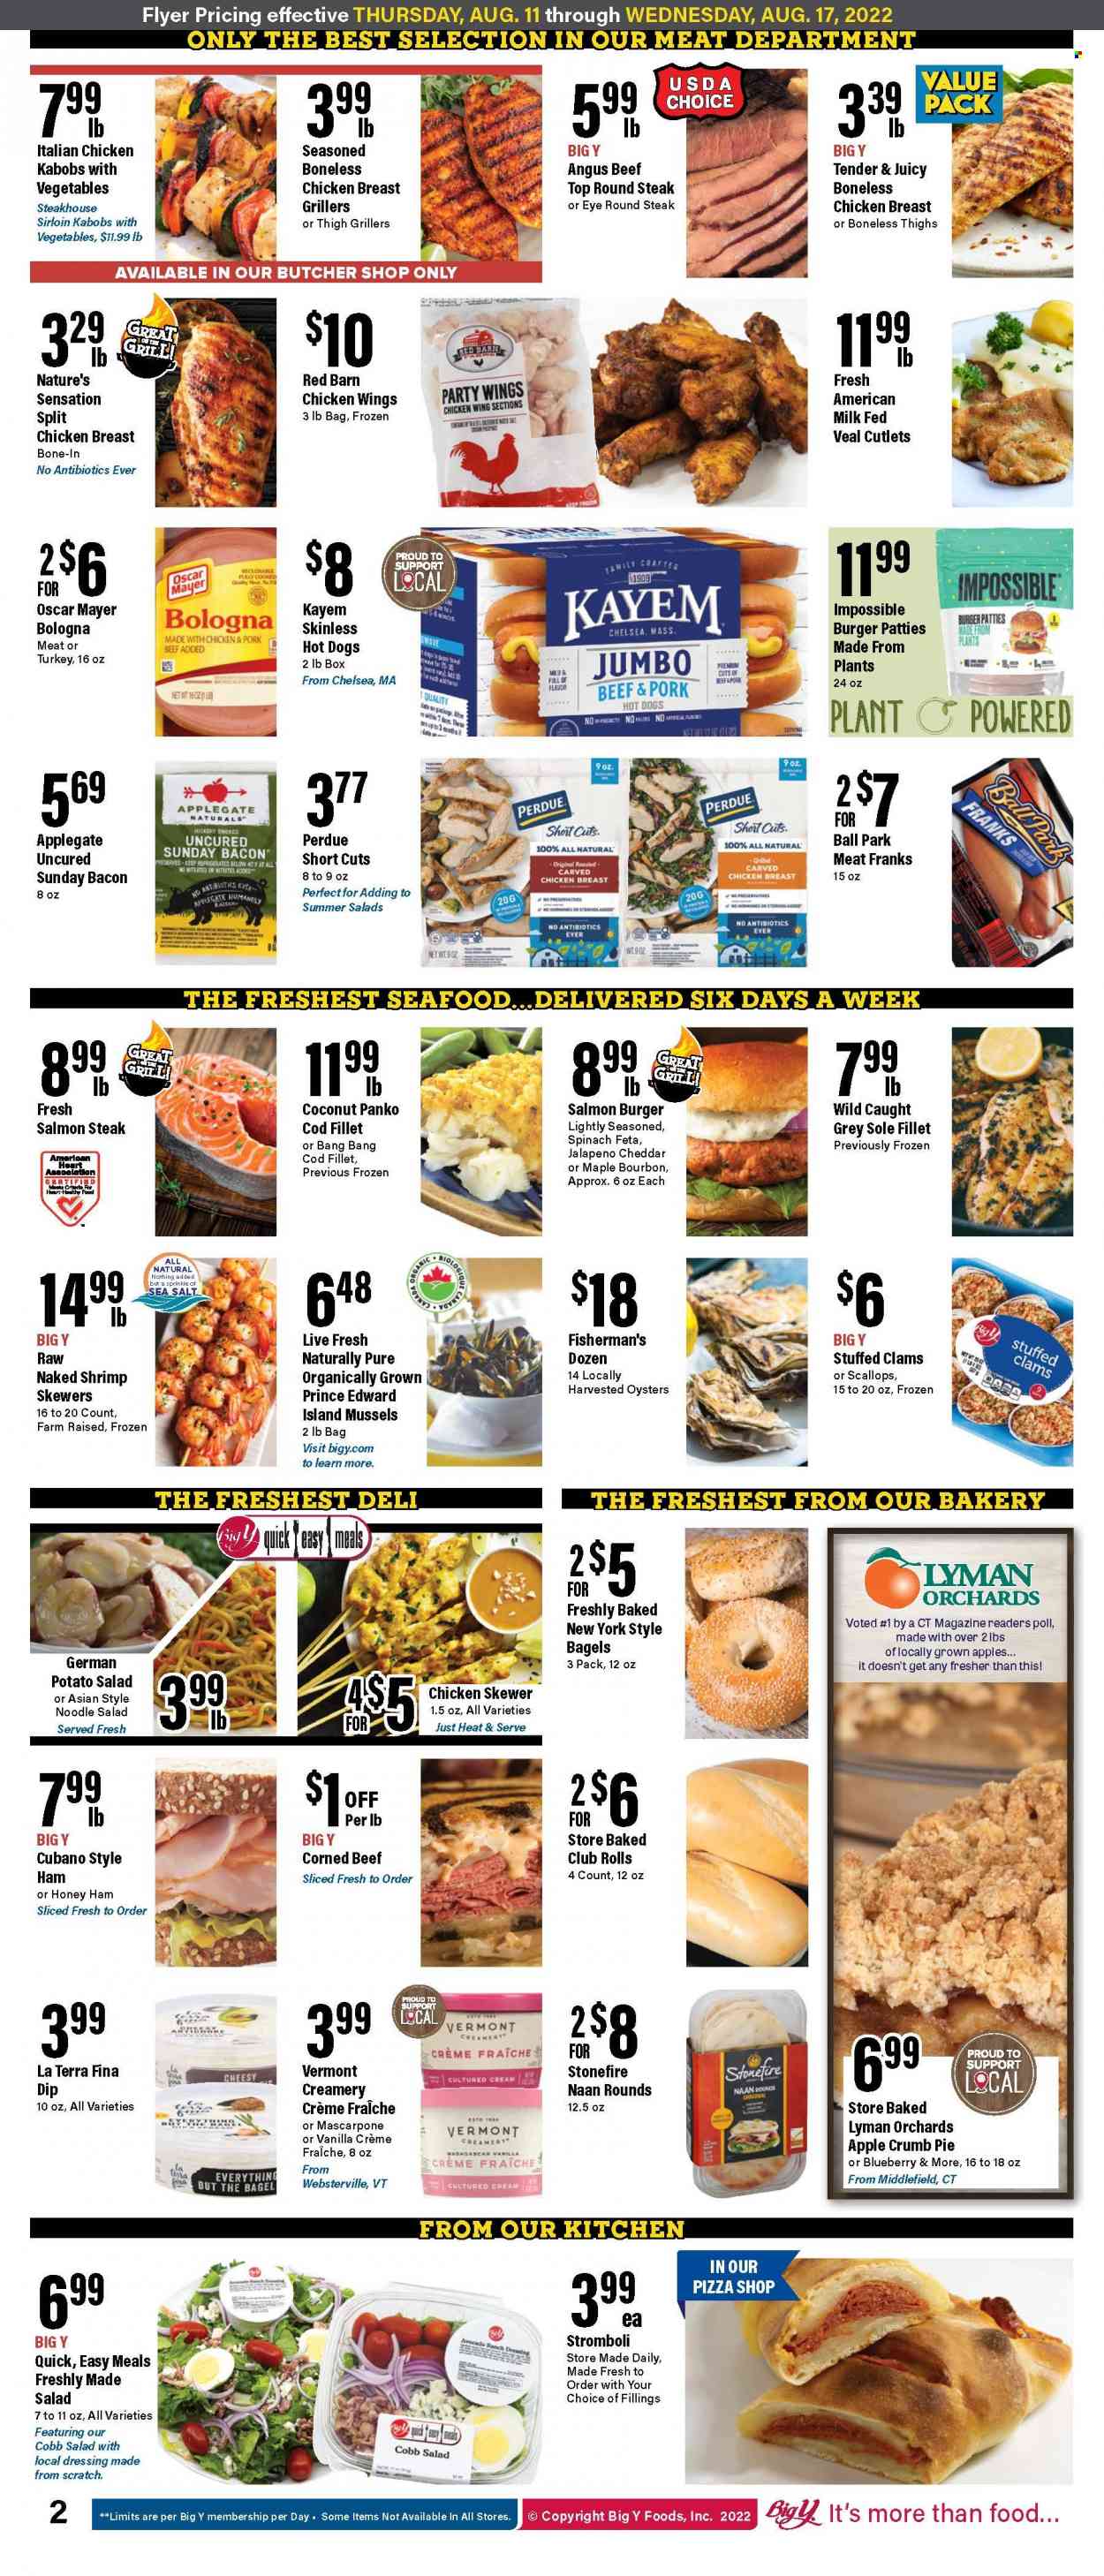 thumbnail - Big Y Flyer - 08/11/2022 - 08/17/2022 - Sales products - pie, panko breadcrumbs, jalapeño, apples, avocado, coconut, clams, cod, mussels, salmon, scallops, oysters, seafood, shrimps, hot dog, pizza, hamburger, noodles, Perdue®, bacon, ham, bologna sausage, Oscar Mayer, potato salad, corned beef, mascarpone, cheddar, feta, milk, crème fraîche, ranch dressing, dip, chicken wings, sea salt, dressing, chicken breasts, beef meat, veal cutlet, veal meat, steak, round steak, burger patties. Page 3.